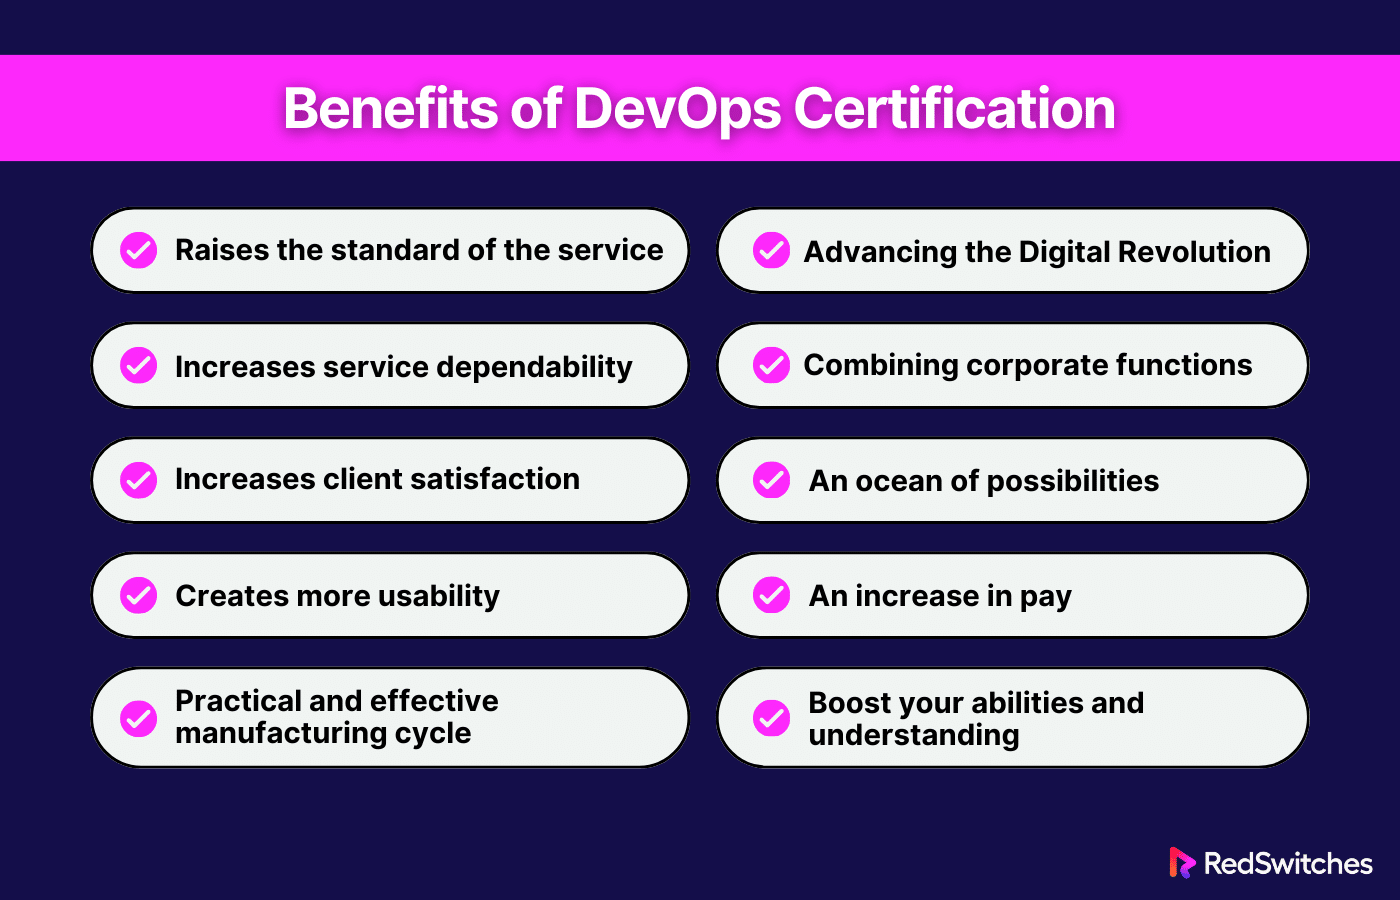 Benefits of DevOps Certification